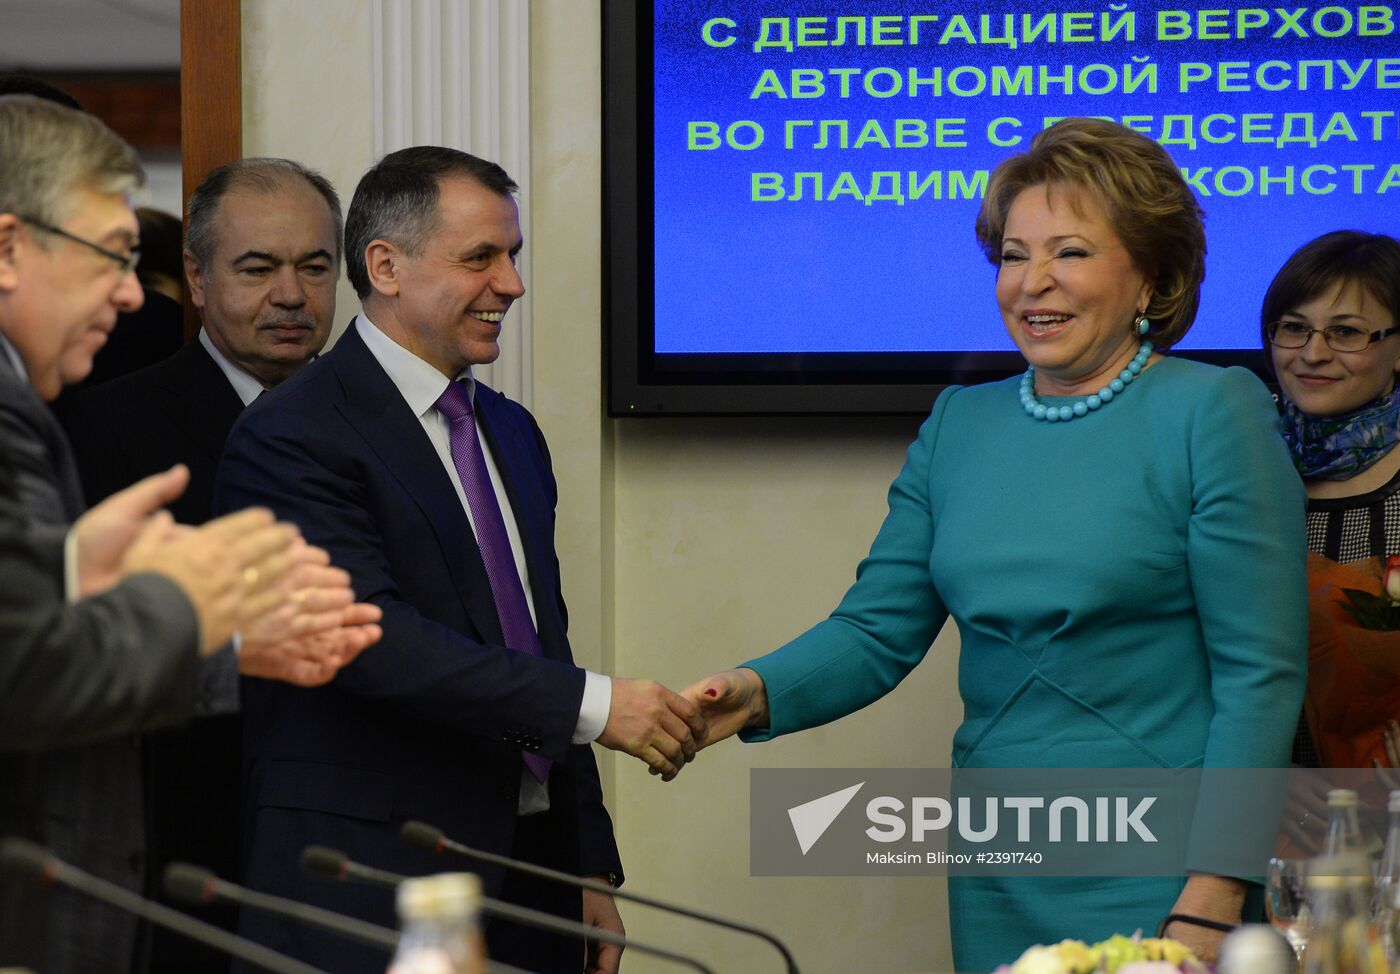 Russian Federation Council Speaker Valentina Matviyenko meets with Crimean Supreme Council delegation